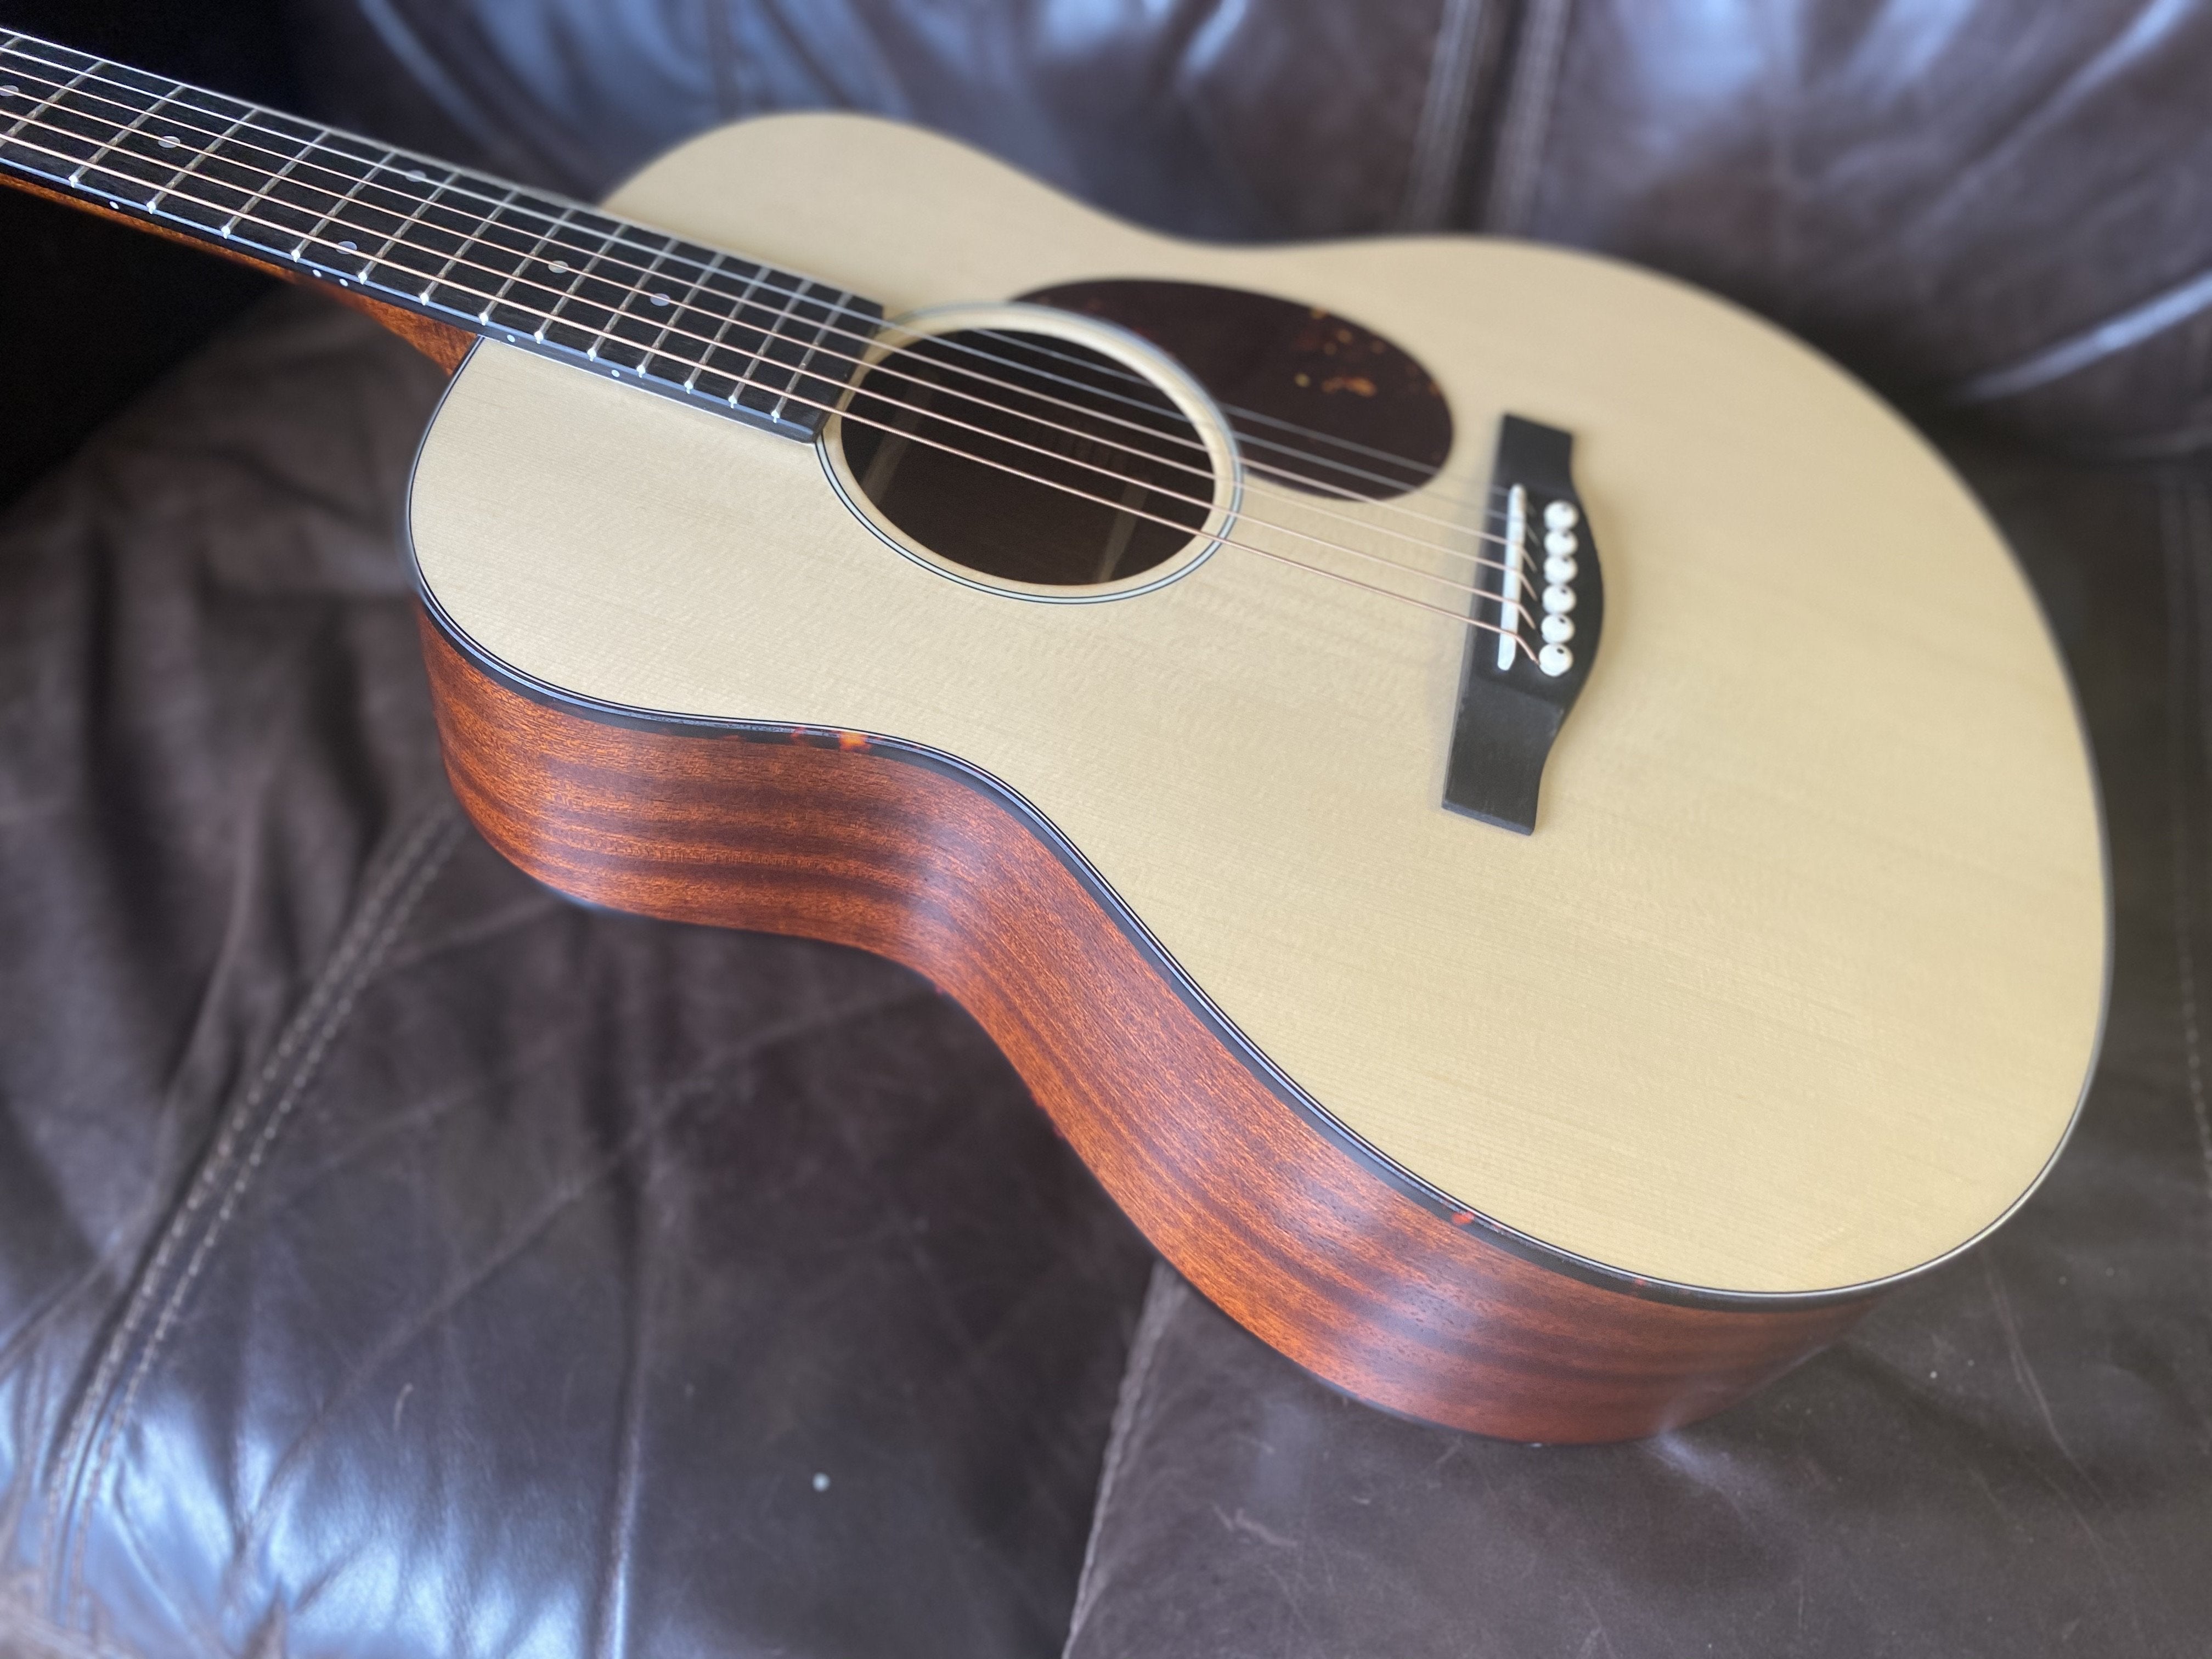 Eastman ACTG-1 Travelguitar, Acoustic Guitar for sale at Richards Guitars.